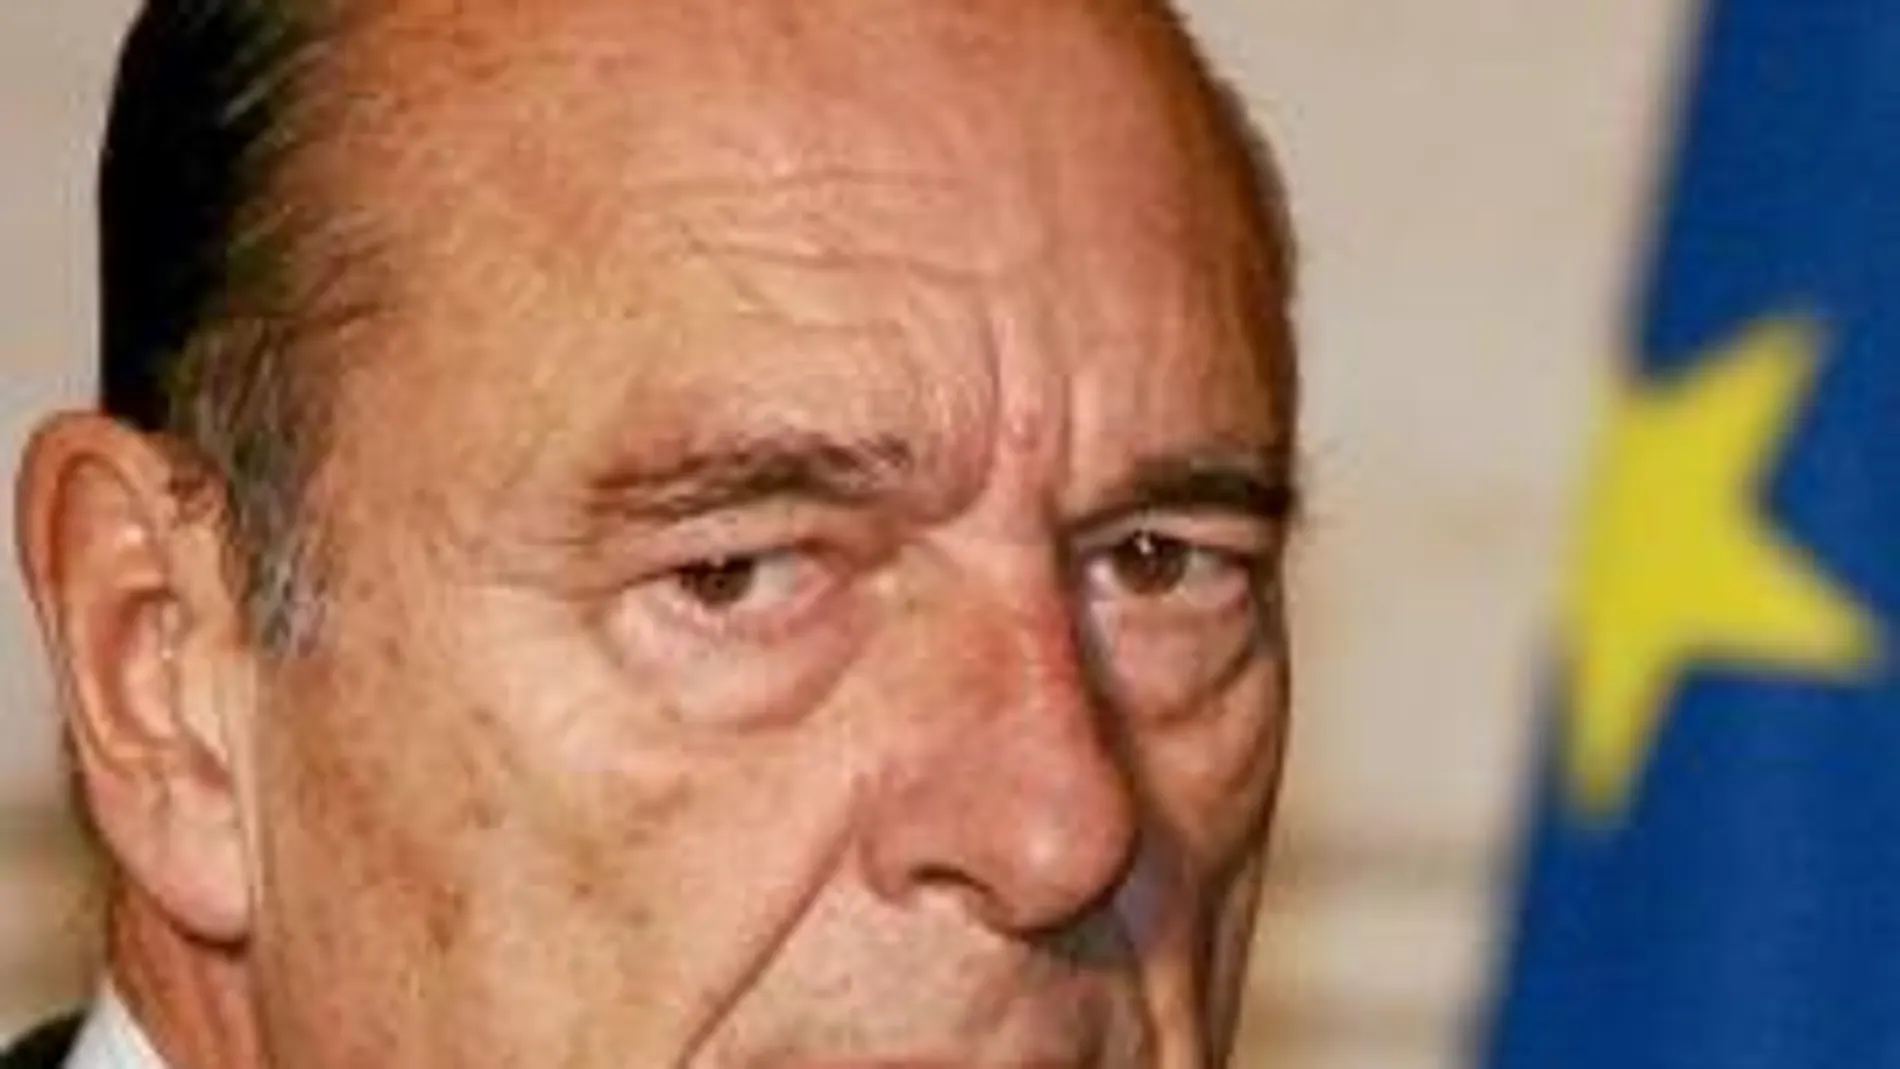 El ex presidente francés Jacques Chirac se sentará en el banquillo